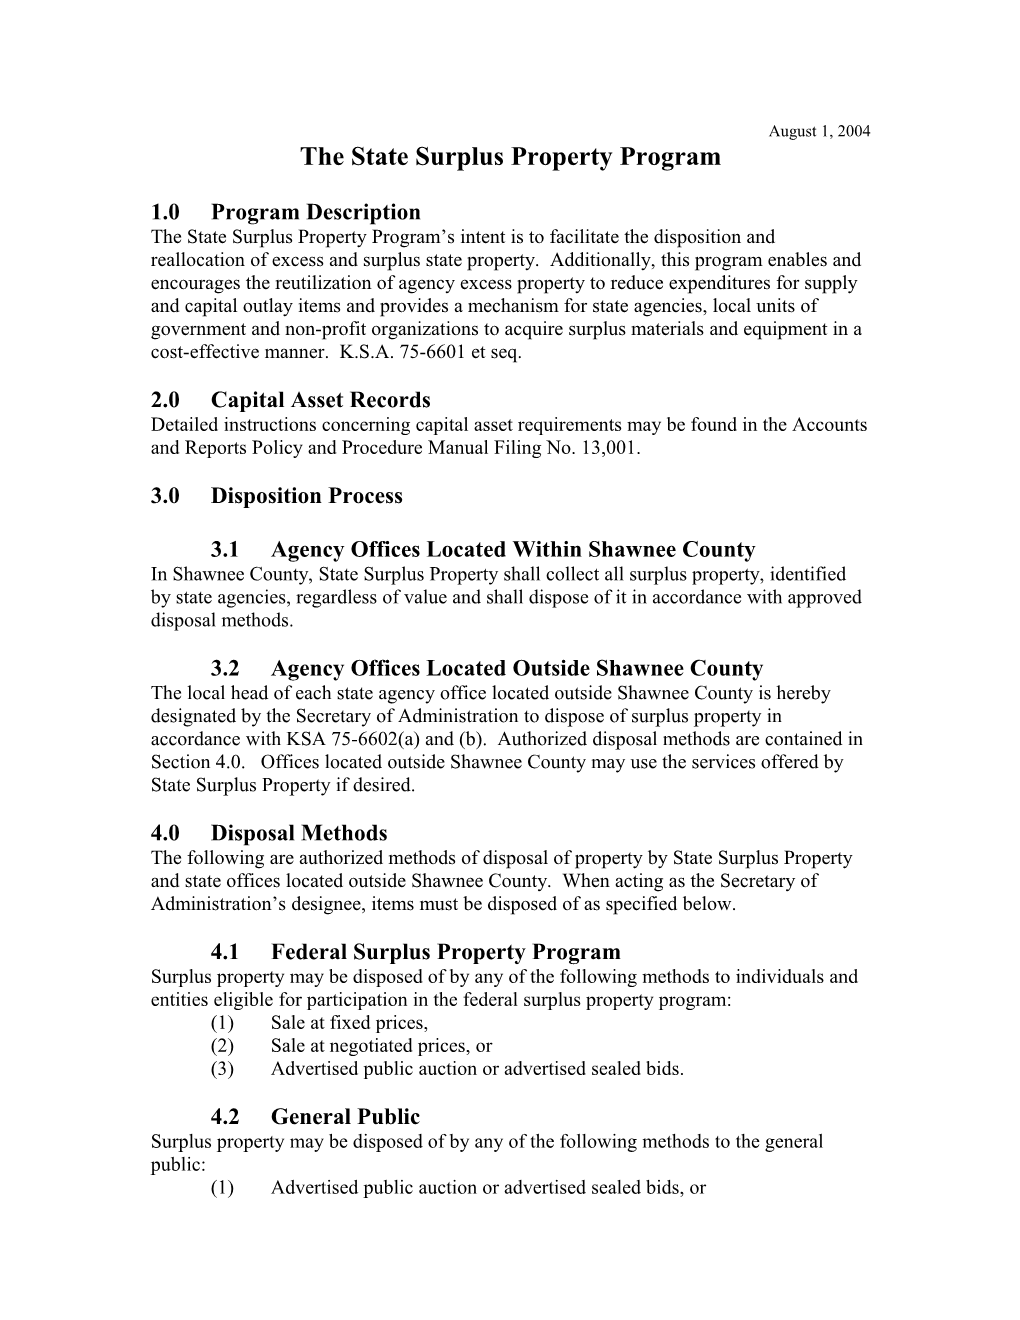 The State Surplus Property Program